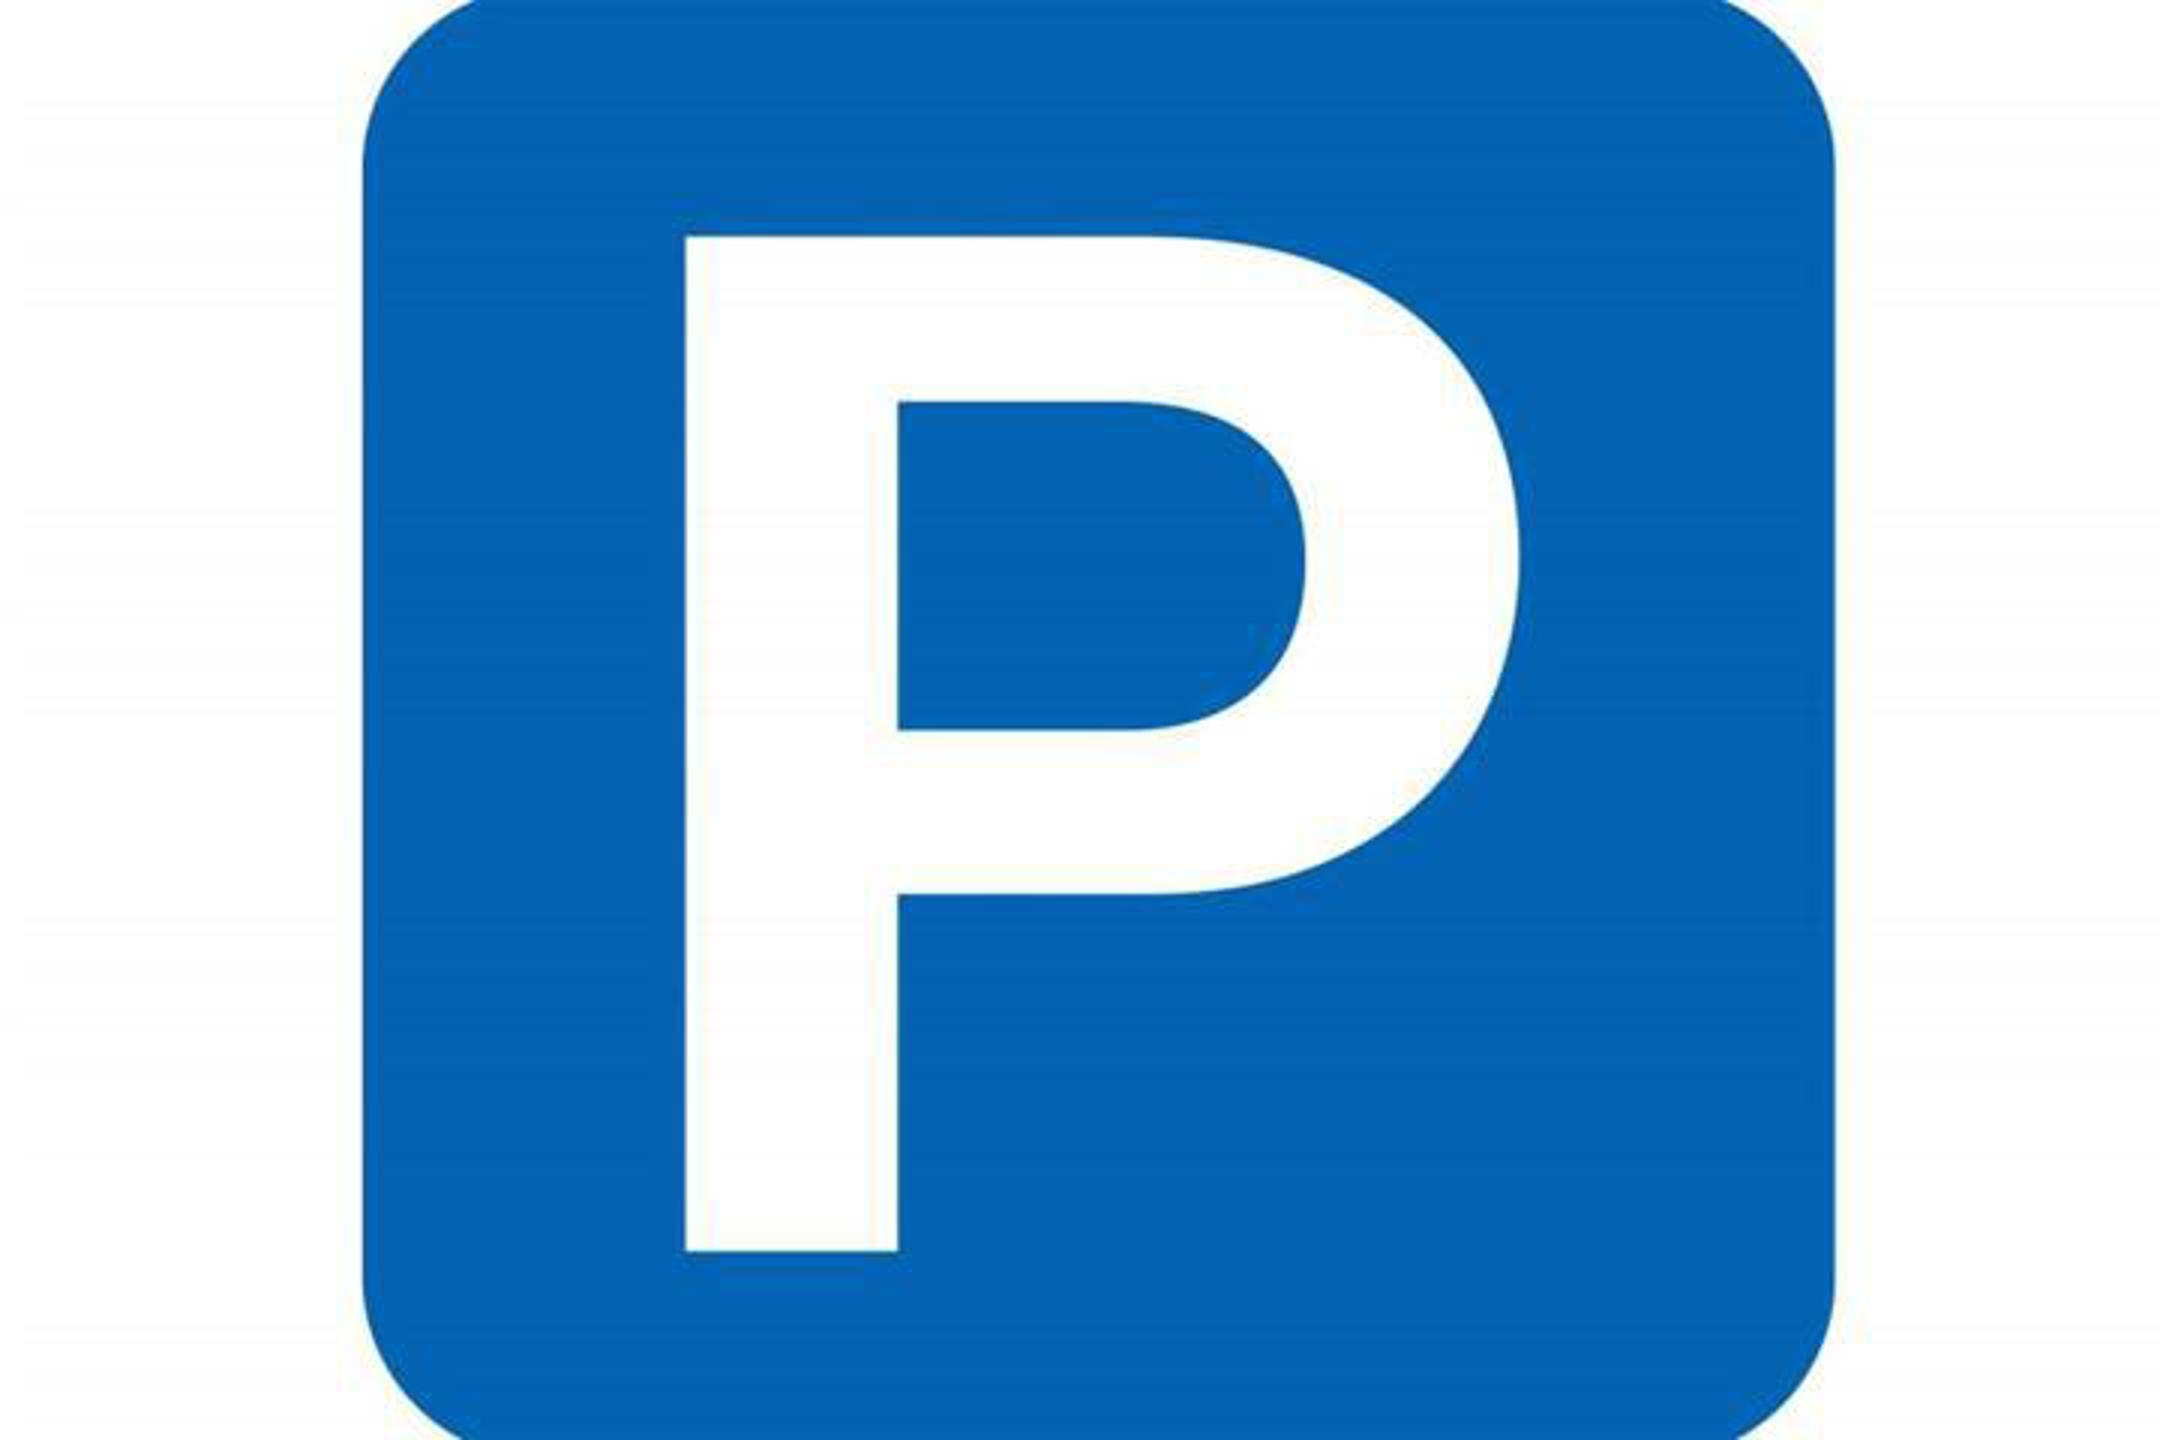 Parking & garage te  huur in Sint-Pieters-Woluwe 1150 110.00€  slaapkamers 12.25m² - Zoekertje 1384713